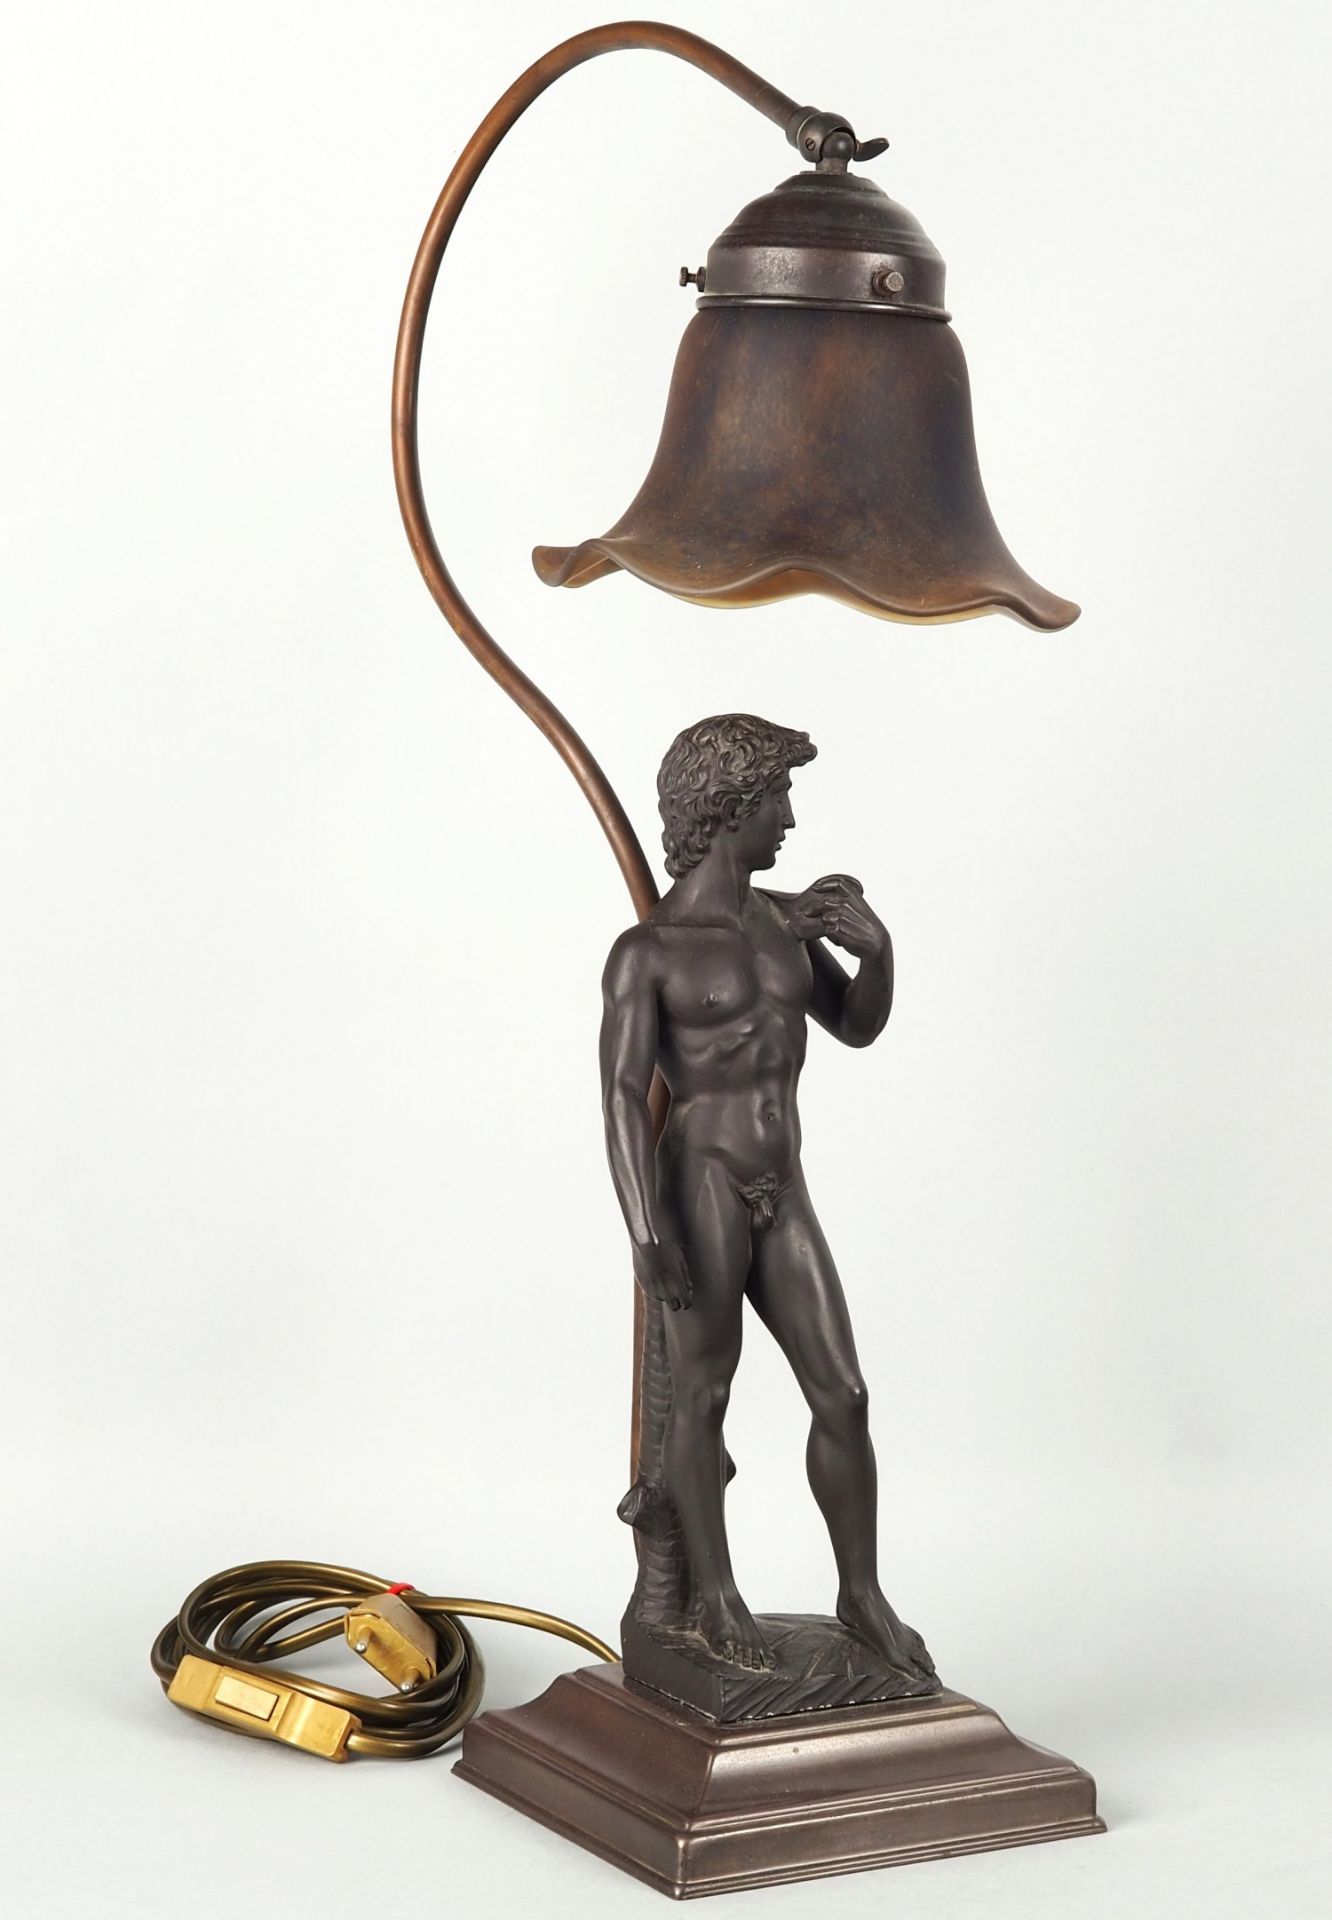 Figural lamp after Michelangelo's David - Image 2 of 3